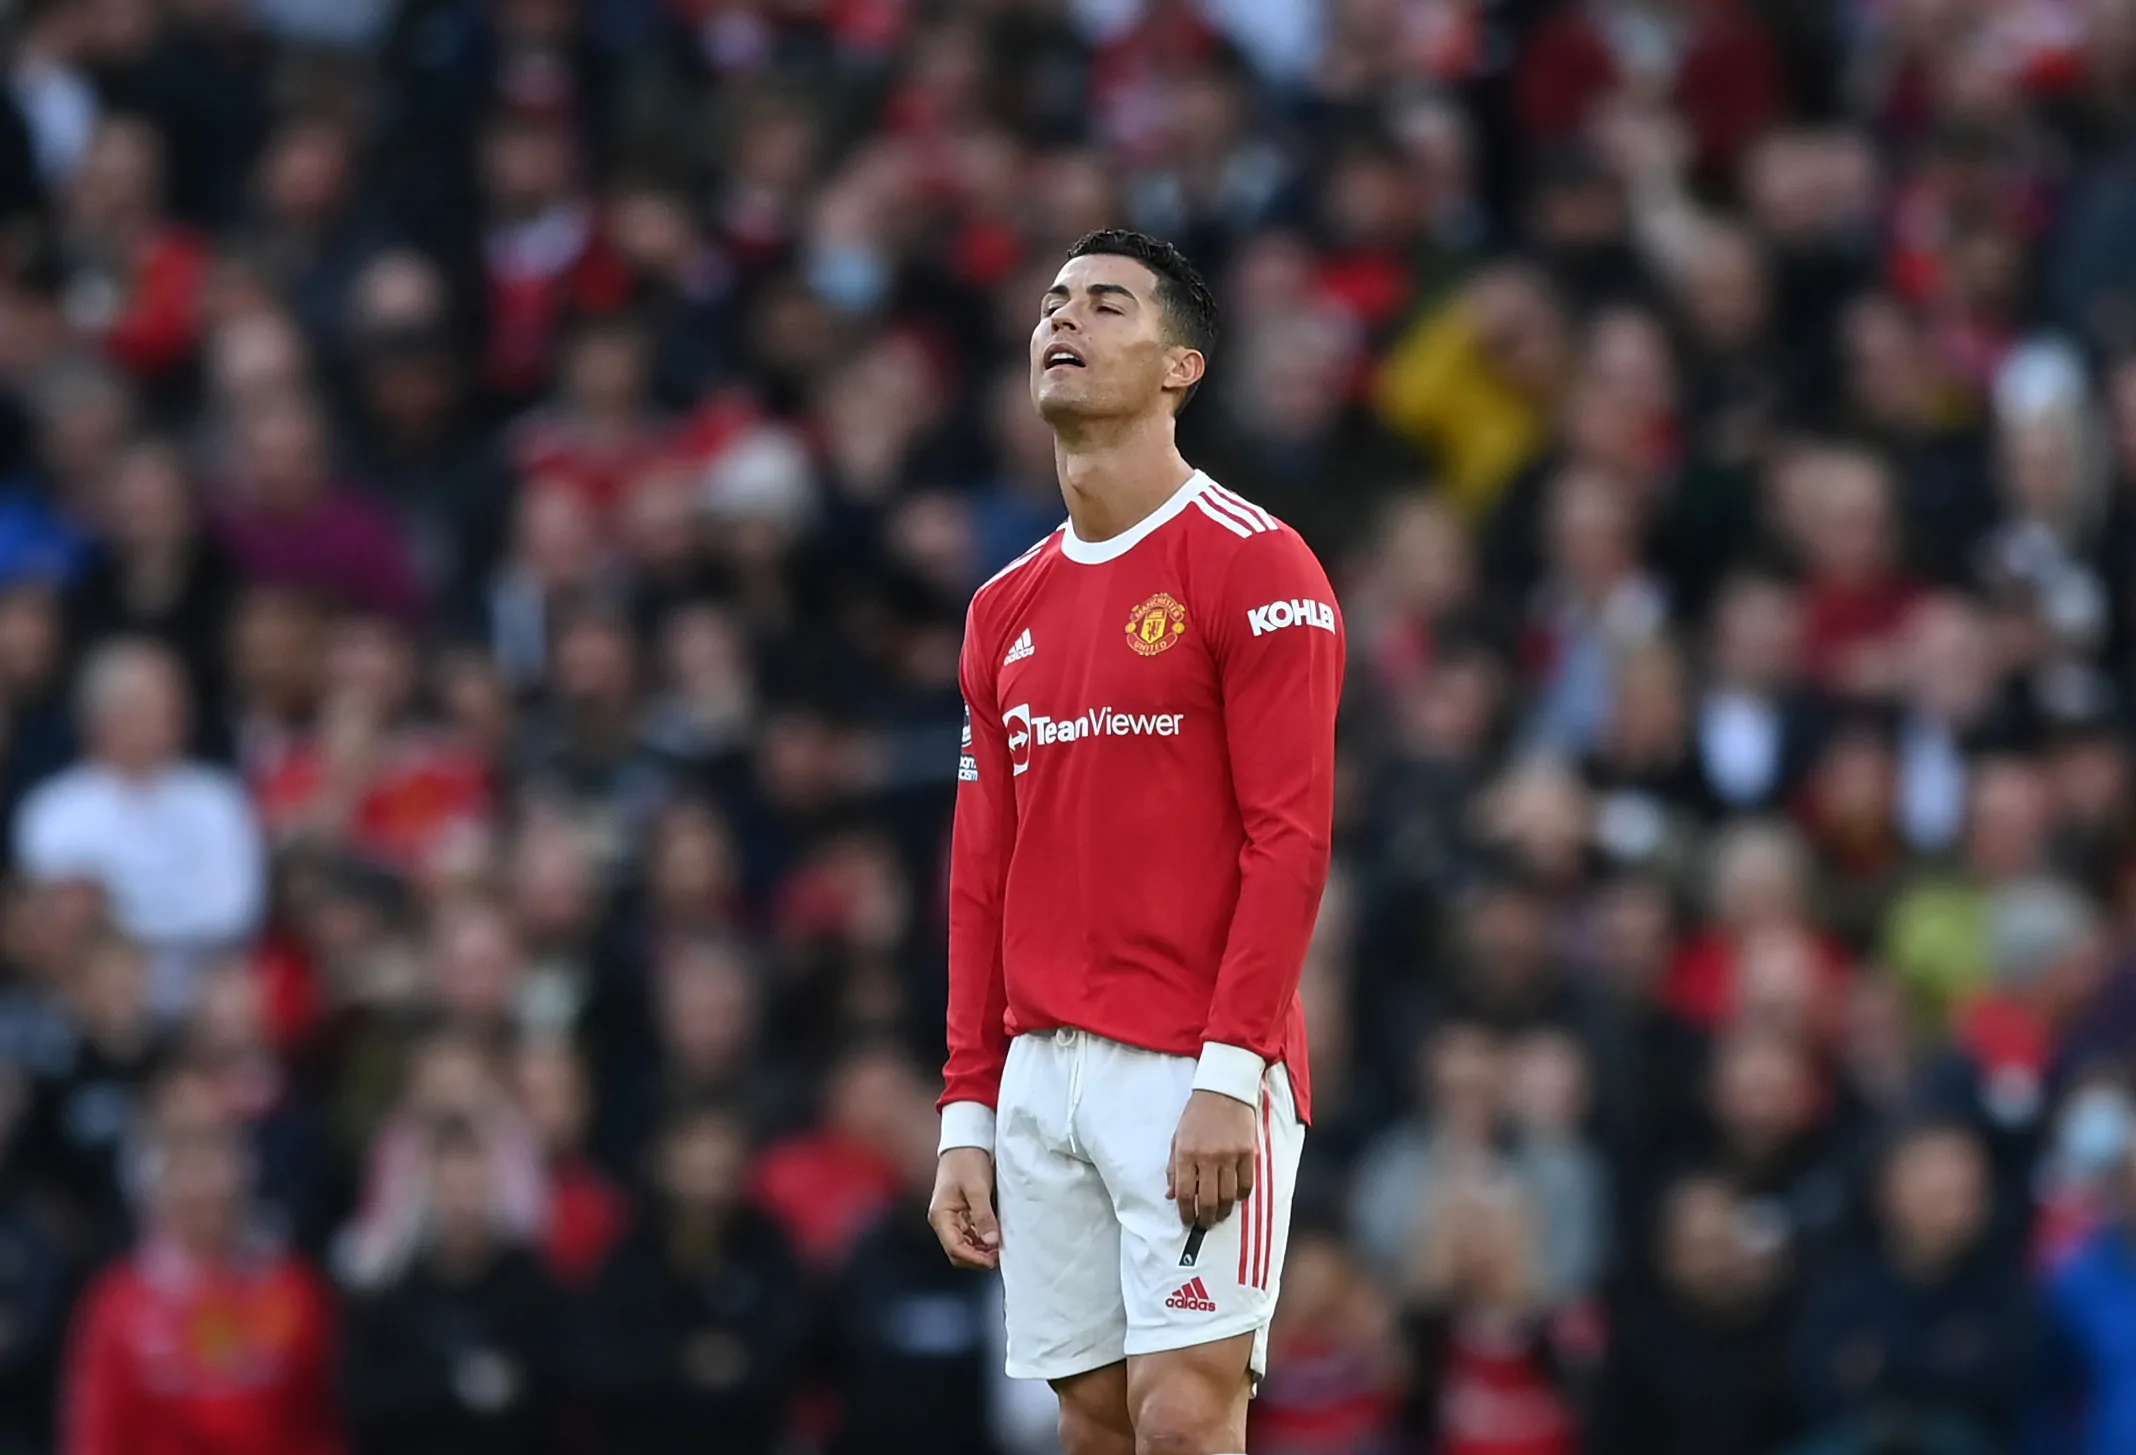 Ronaldo-Manchester United, novità dall’Inghilterra: la notizia sconvolge i tifosi!